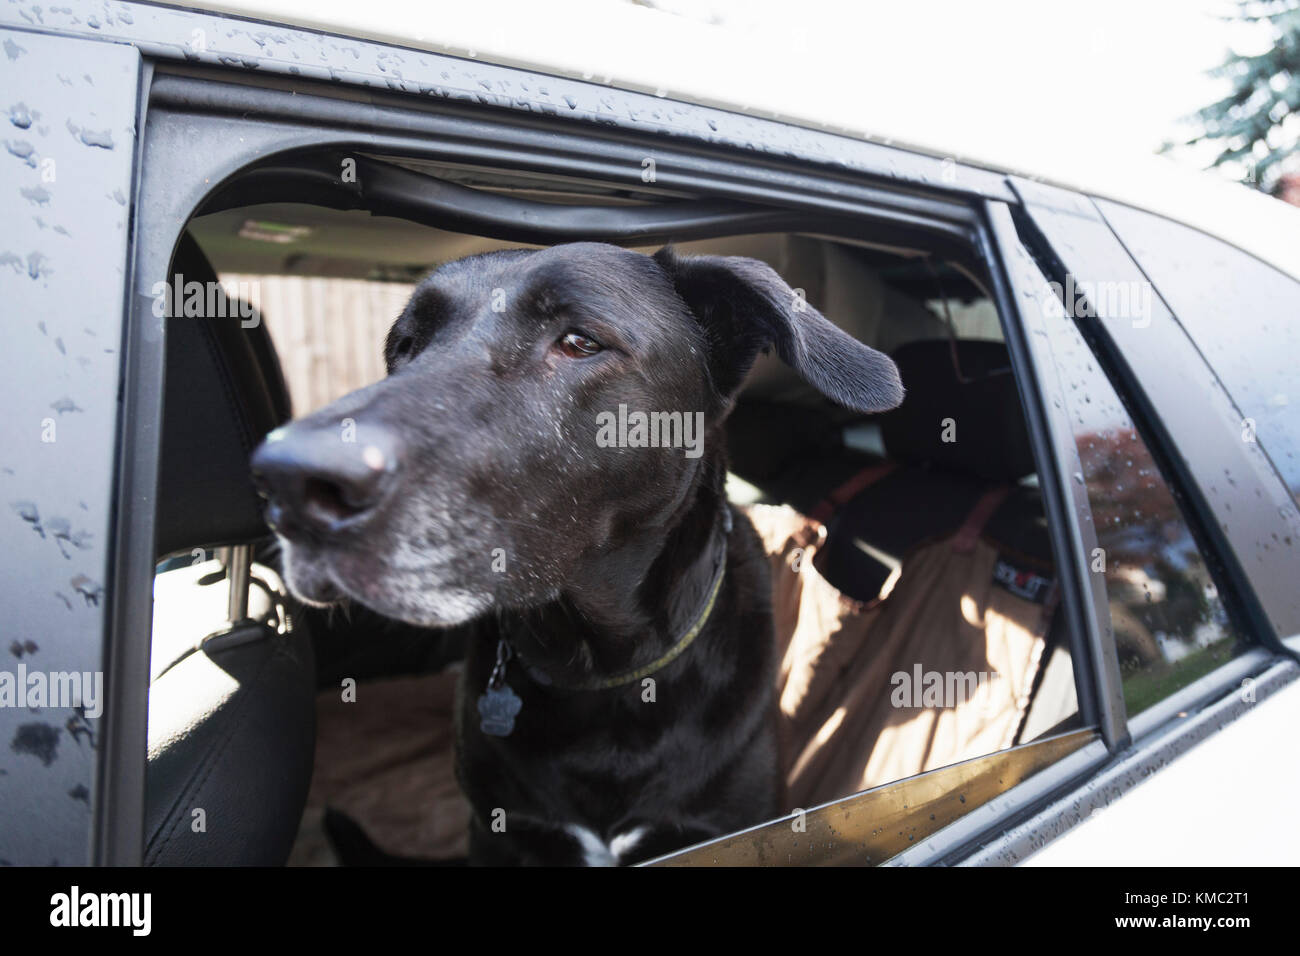 Black dog sitting calmly after destroying vehicle interior. Stock Photo